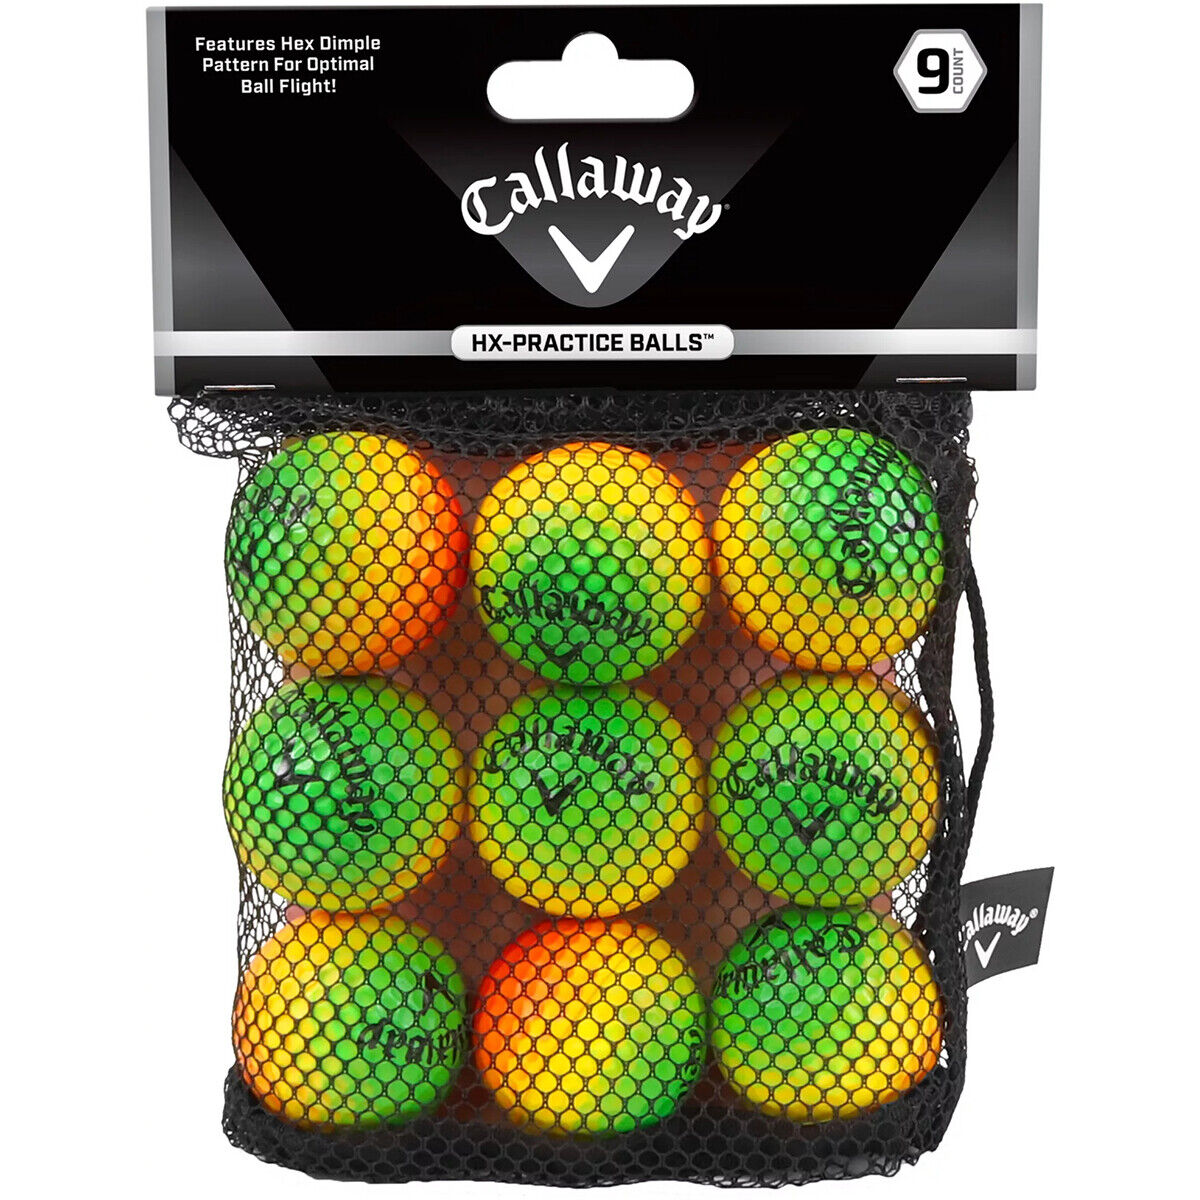 Callaway HX Soft Flight Practice Golf Balls - 9-Pack - Multicolor